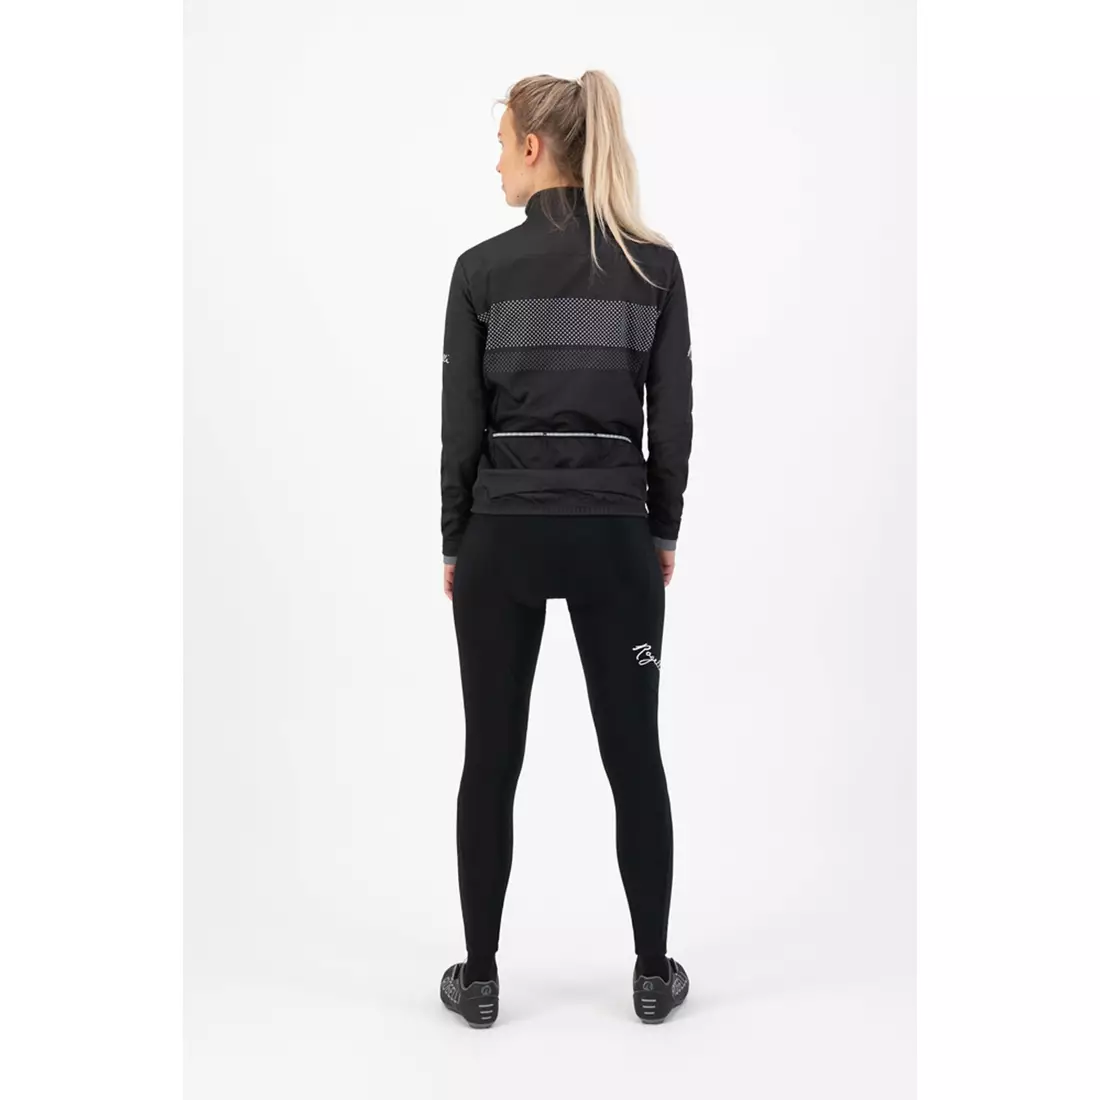 Rogelli Women's cycling jacket, Ultralight PURPOSE, black, ROG351083